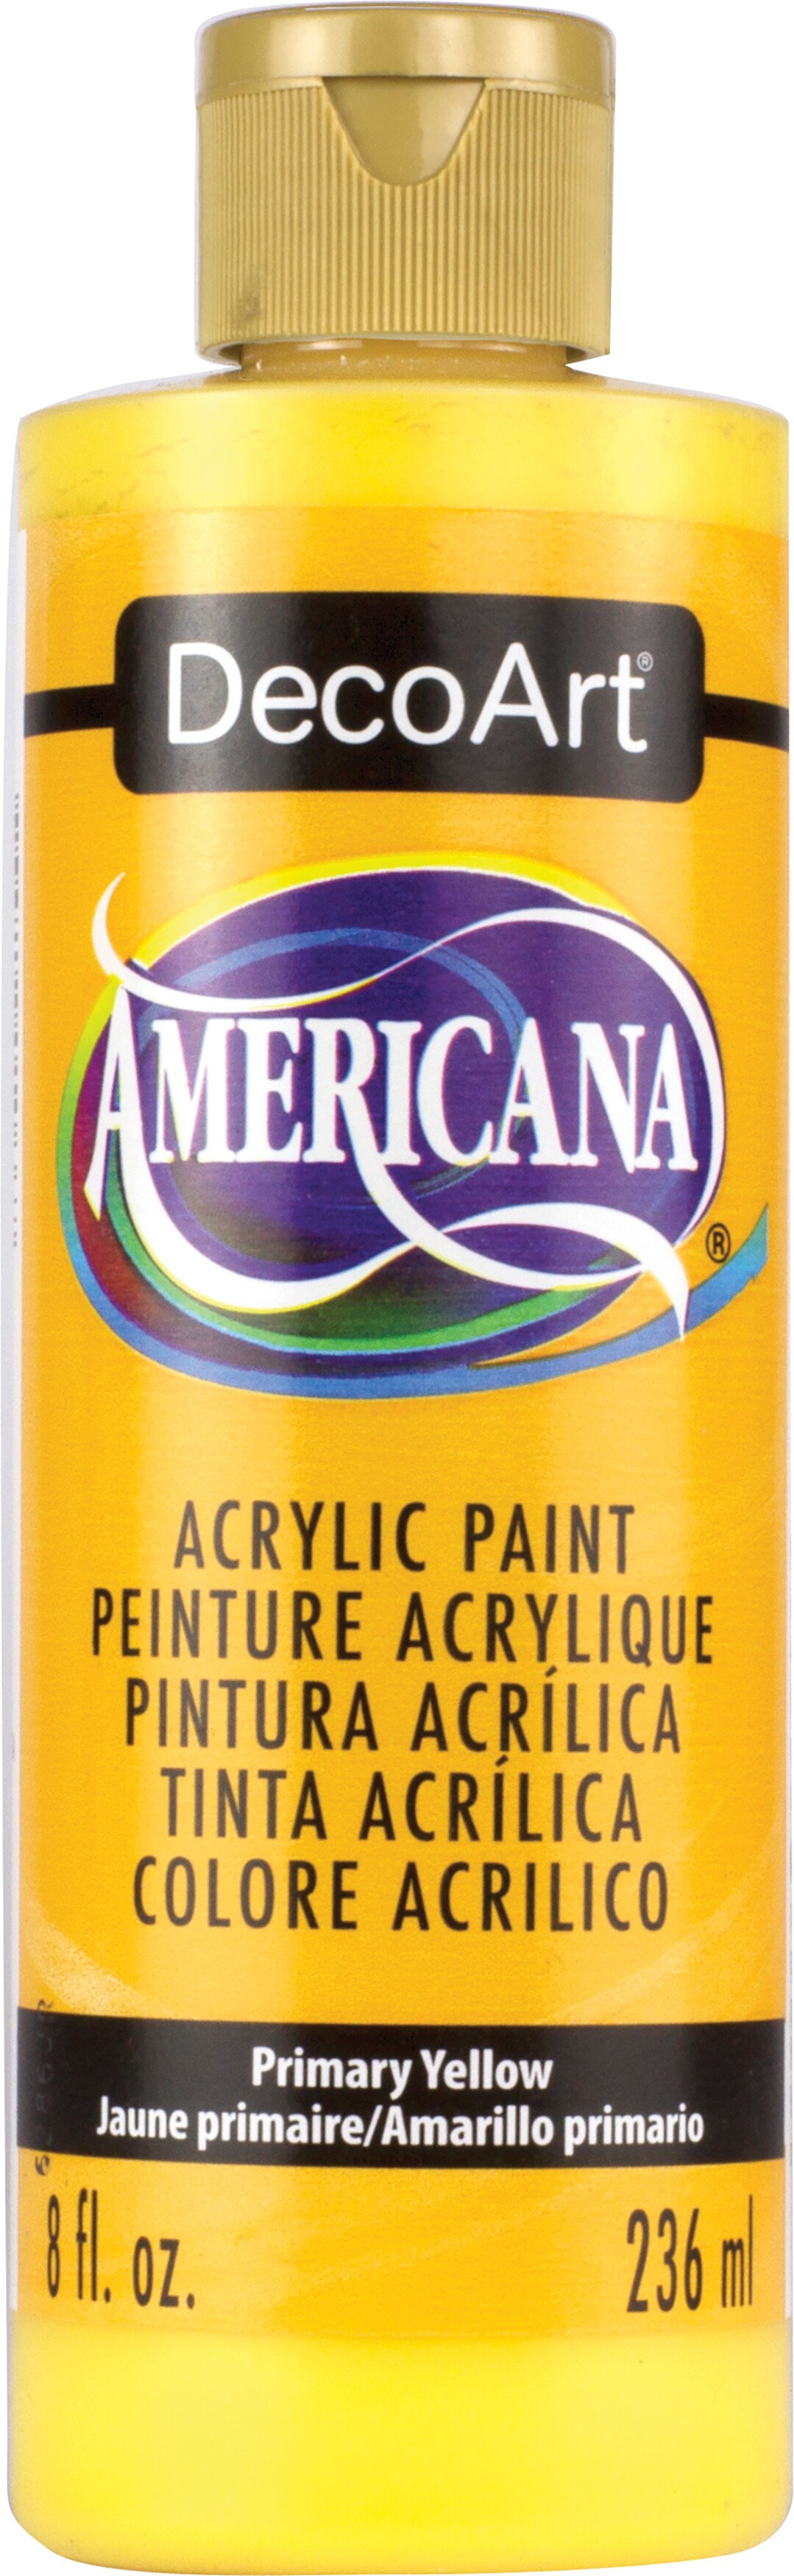 DecoArt Acrylic Paint Primary Yellow 8 oz